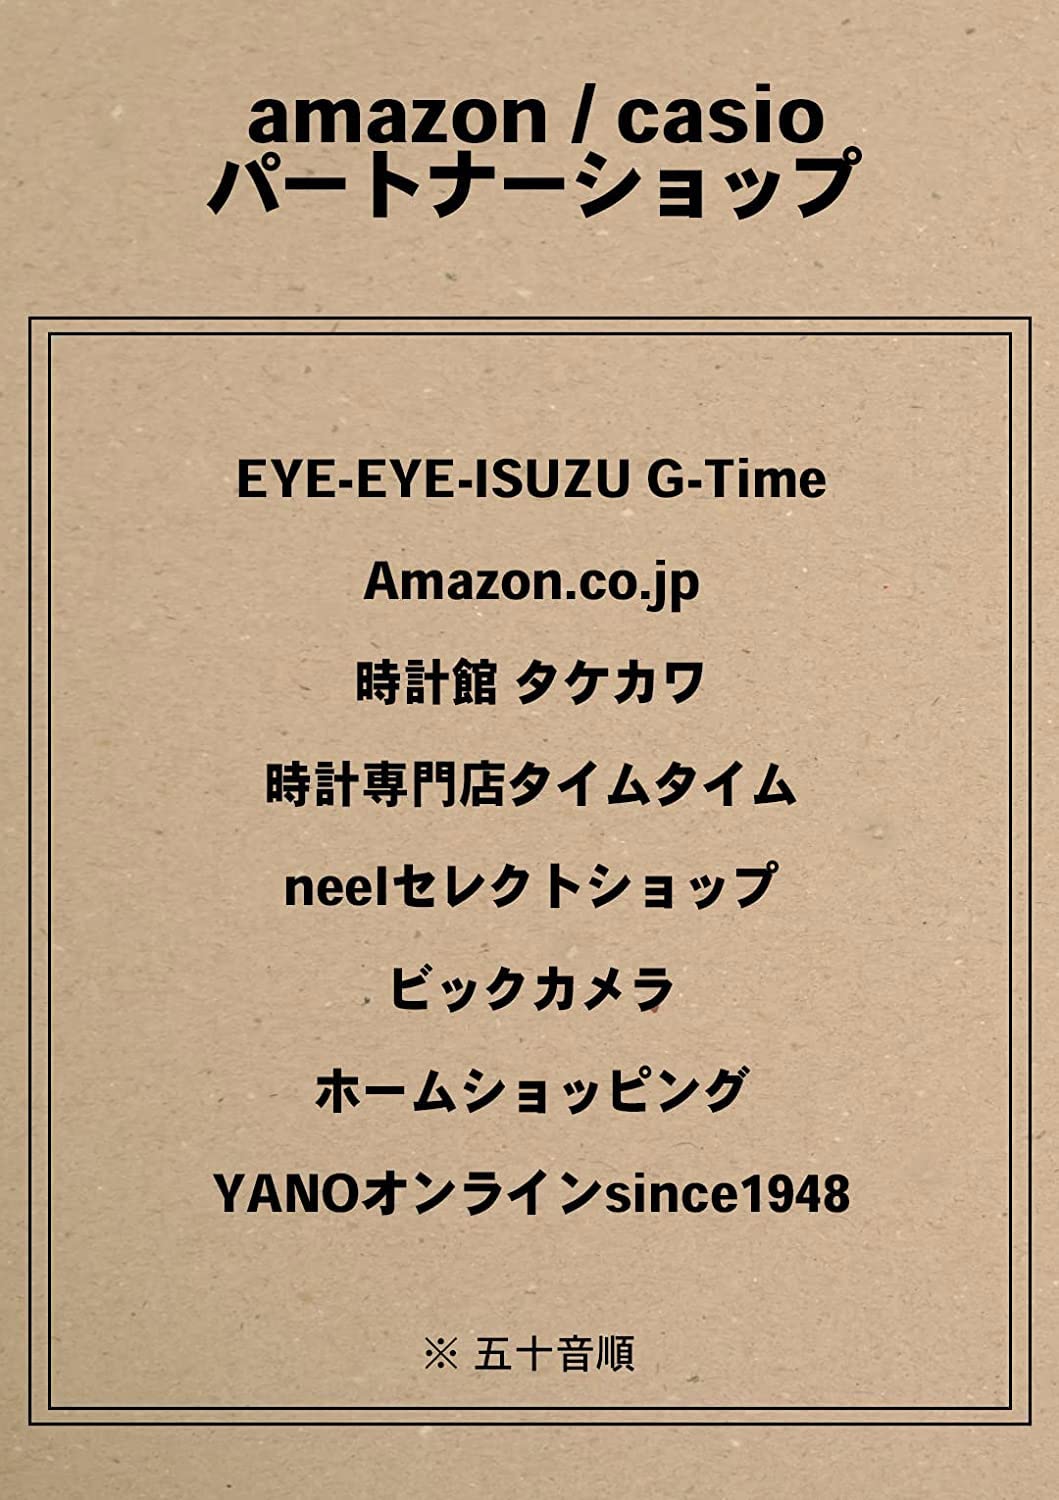 Casio DW-6900JT-3JF [G-Shock JOYTOPIA Series] Watch Japan Import May 2023 Model